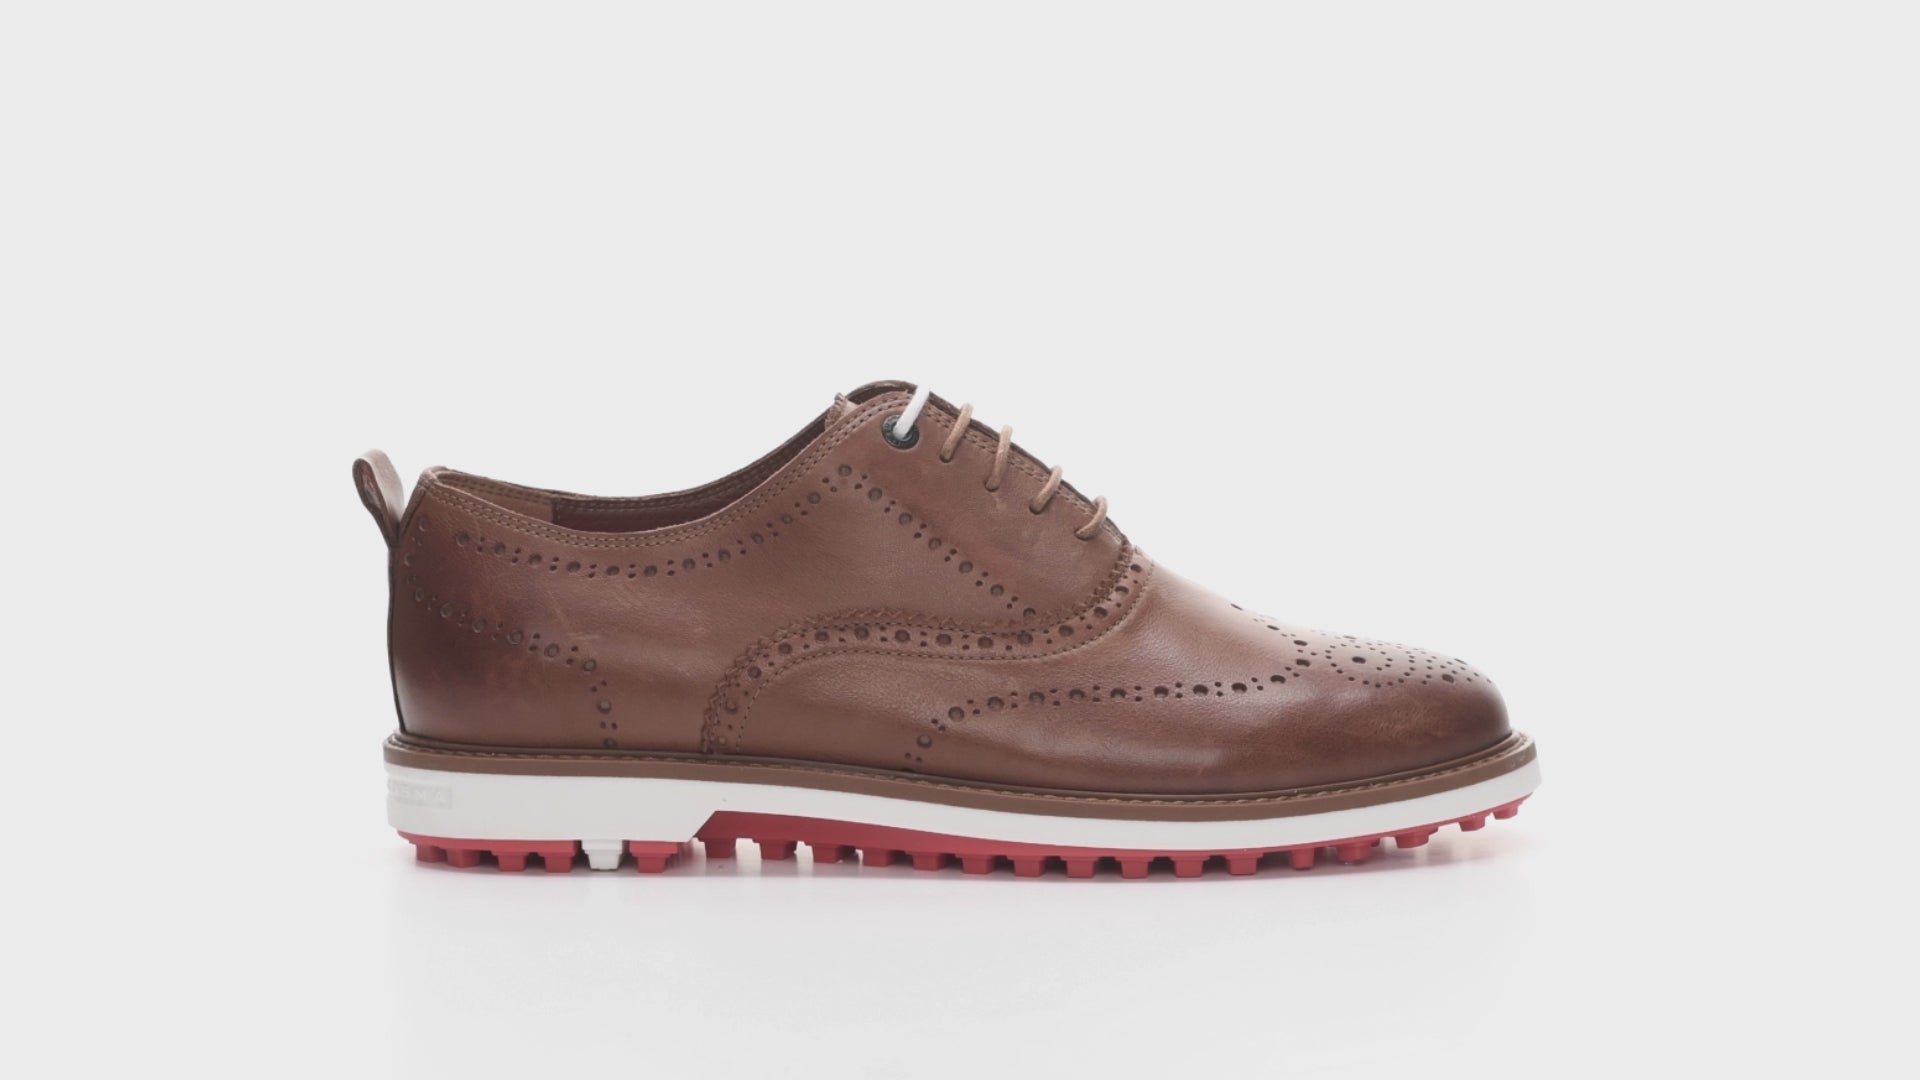 Churchill brown men's golf shoe from duca del cosma